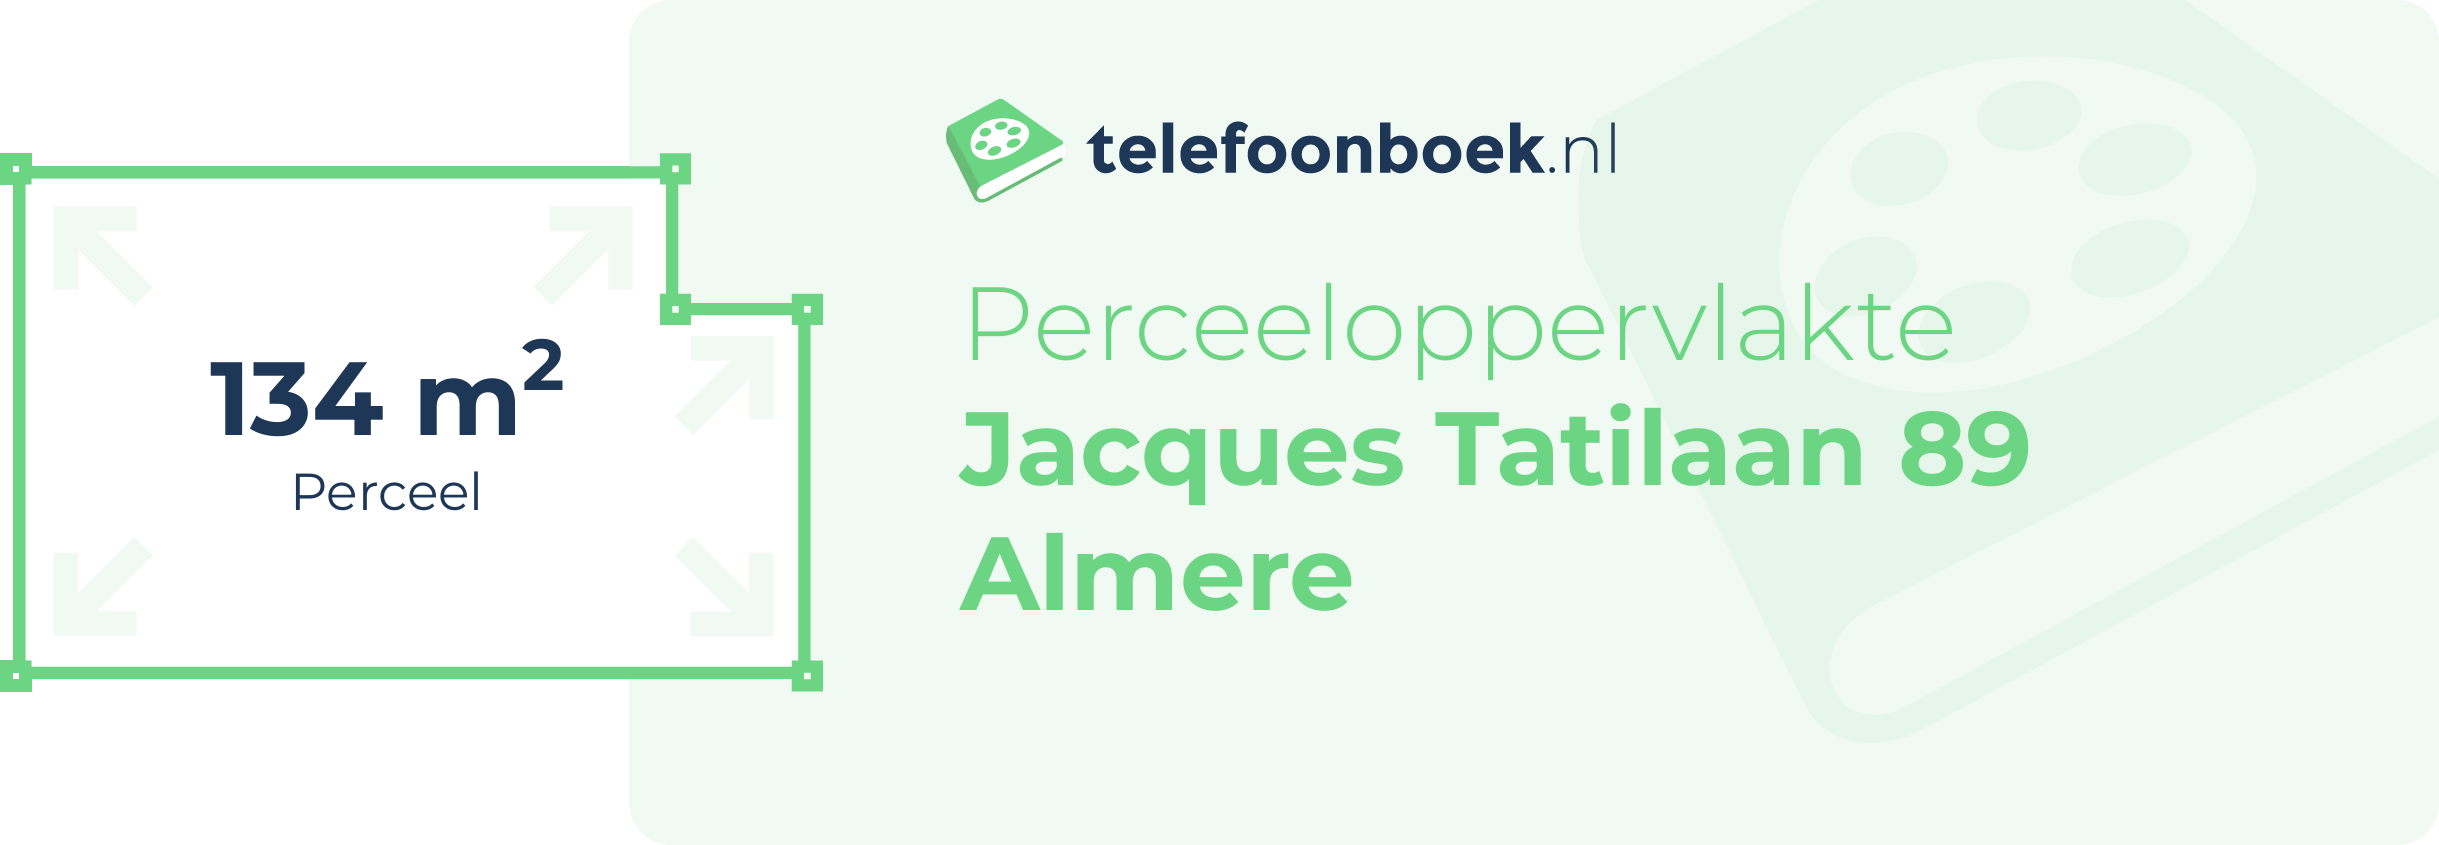 Perceeloppervlakte Jacques Tatilaan 89 Almere